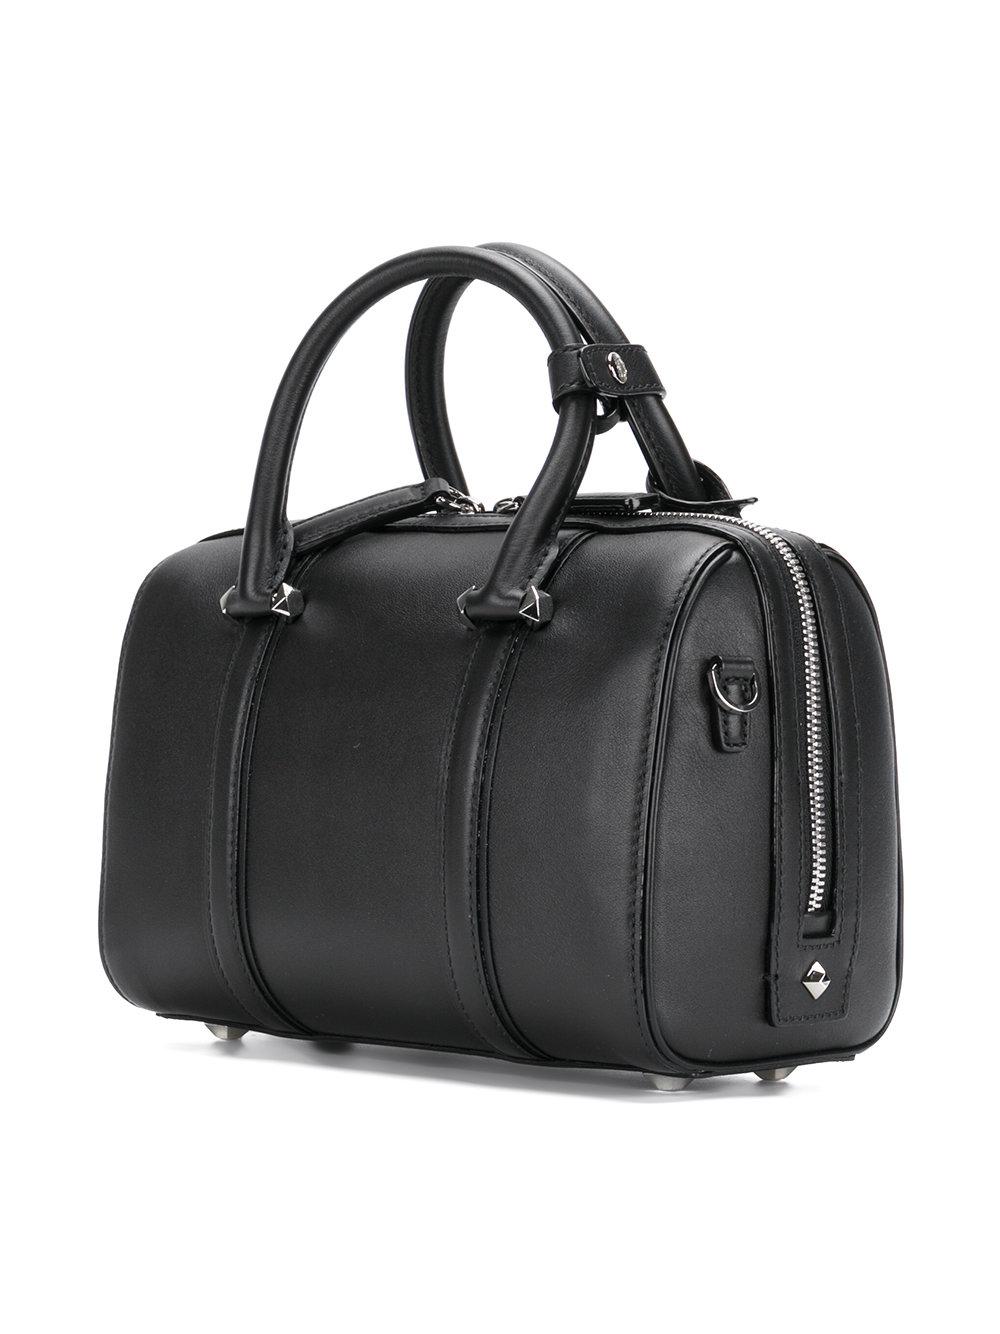 MCM Leather Essential Boston Tote Bag in Black - Lyst